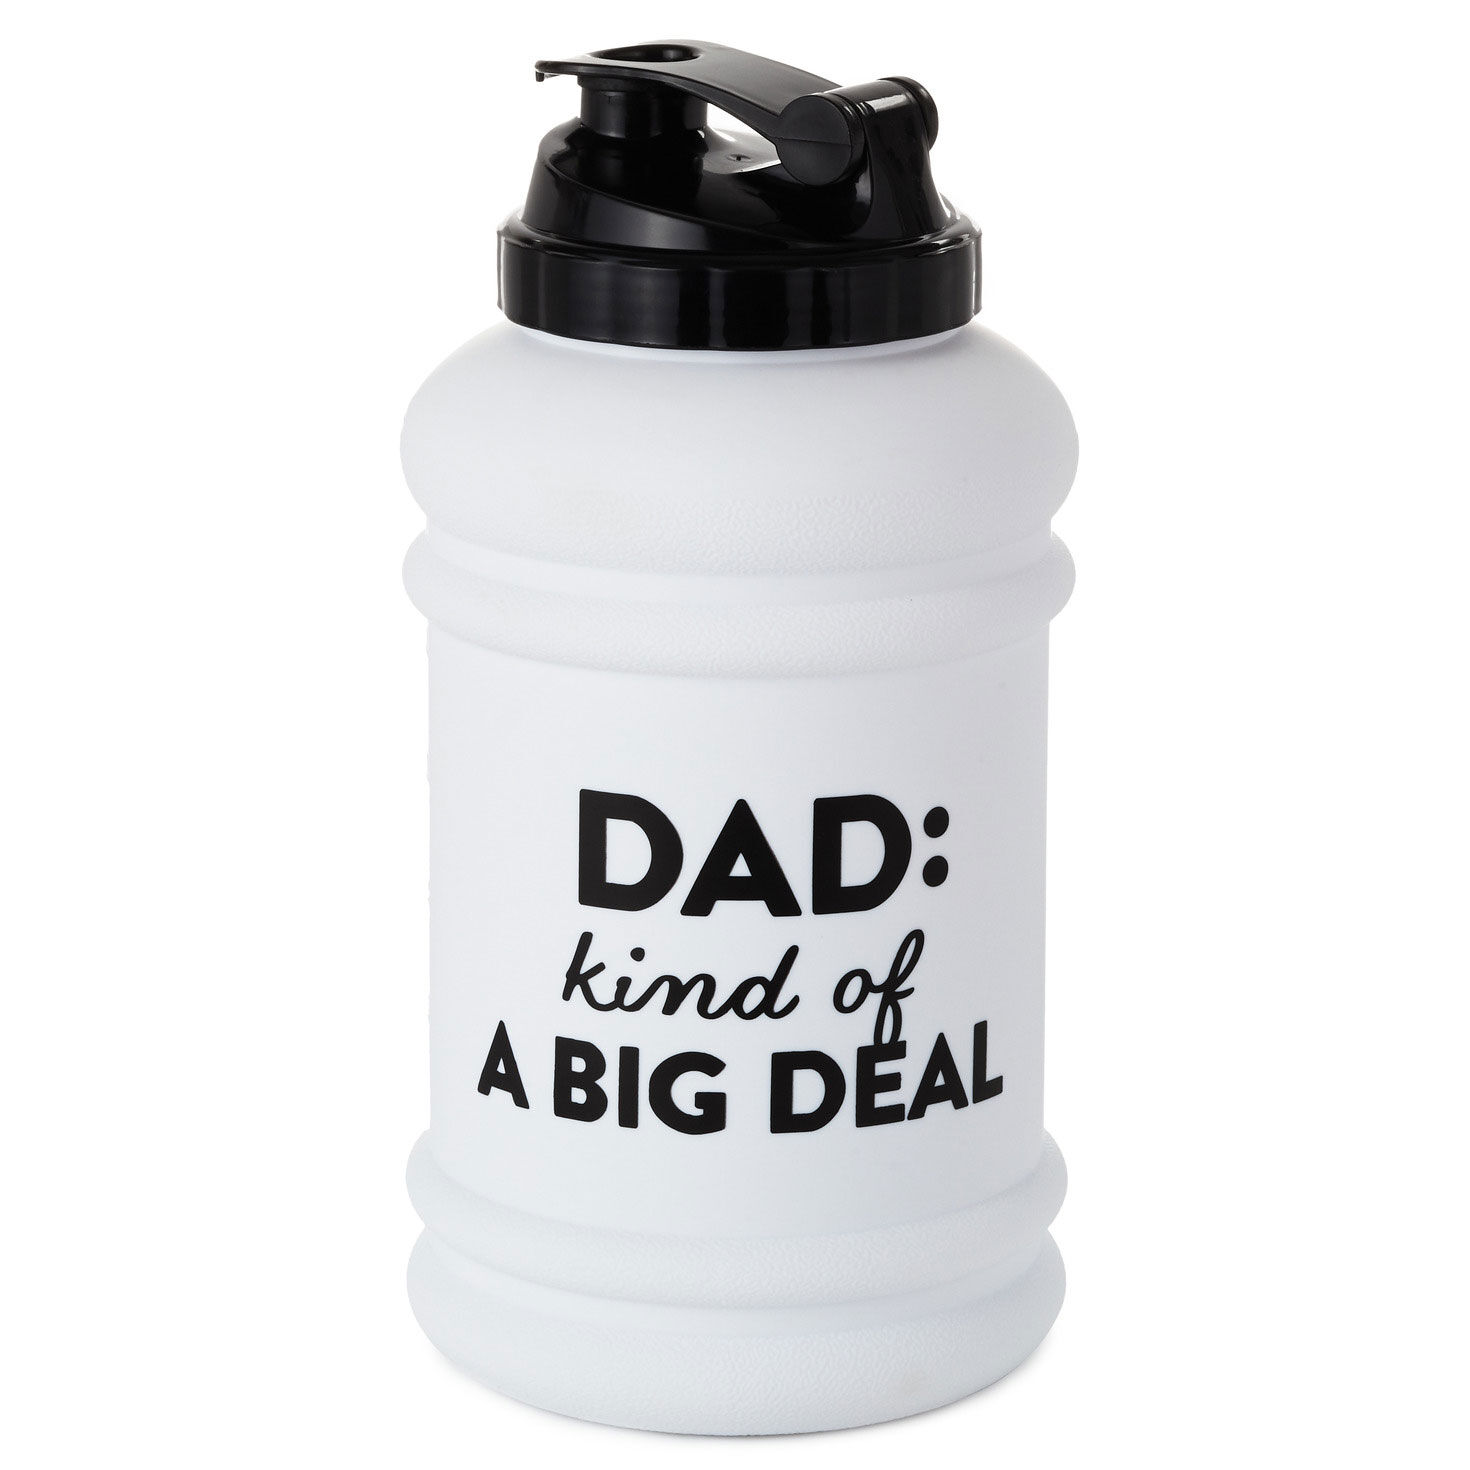 Dad: Kind of a Big Deal Water Jug, 80 oz. - Water Bottles - Hallmark